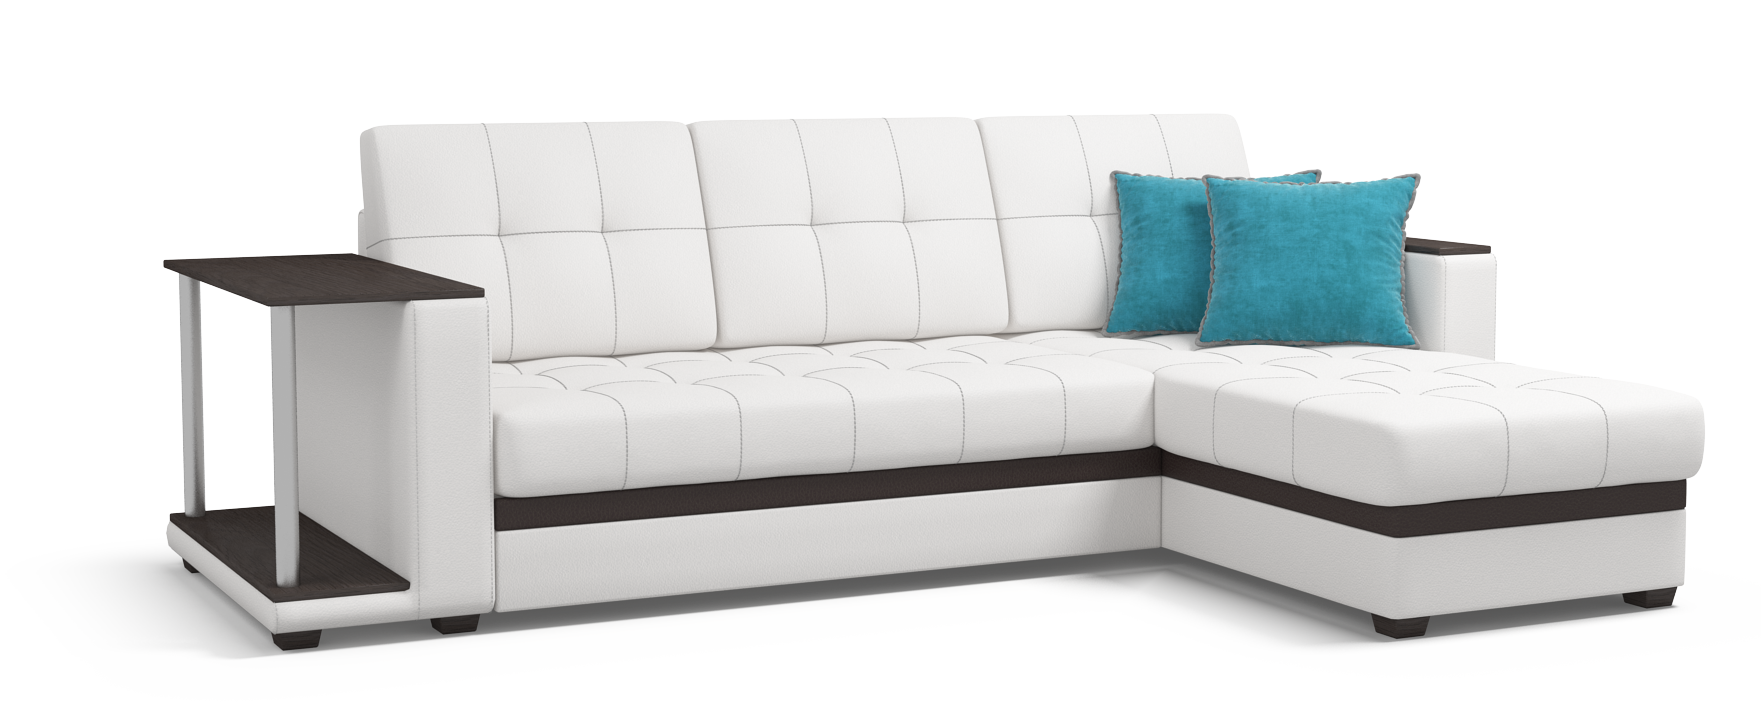 Диван Атланта 140х200. Белый угловой диван много мебели. Угловой диван на прозрачном фоне. Угловой диван со столиком. Много мебели новосибирск диваны